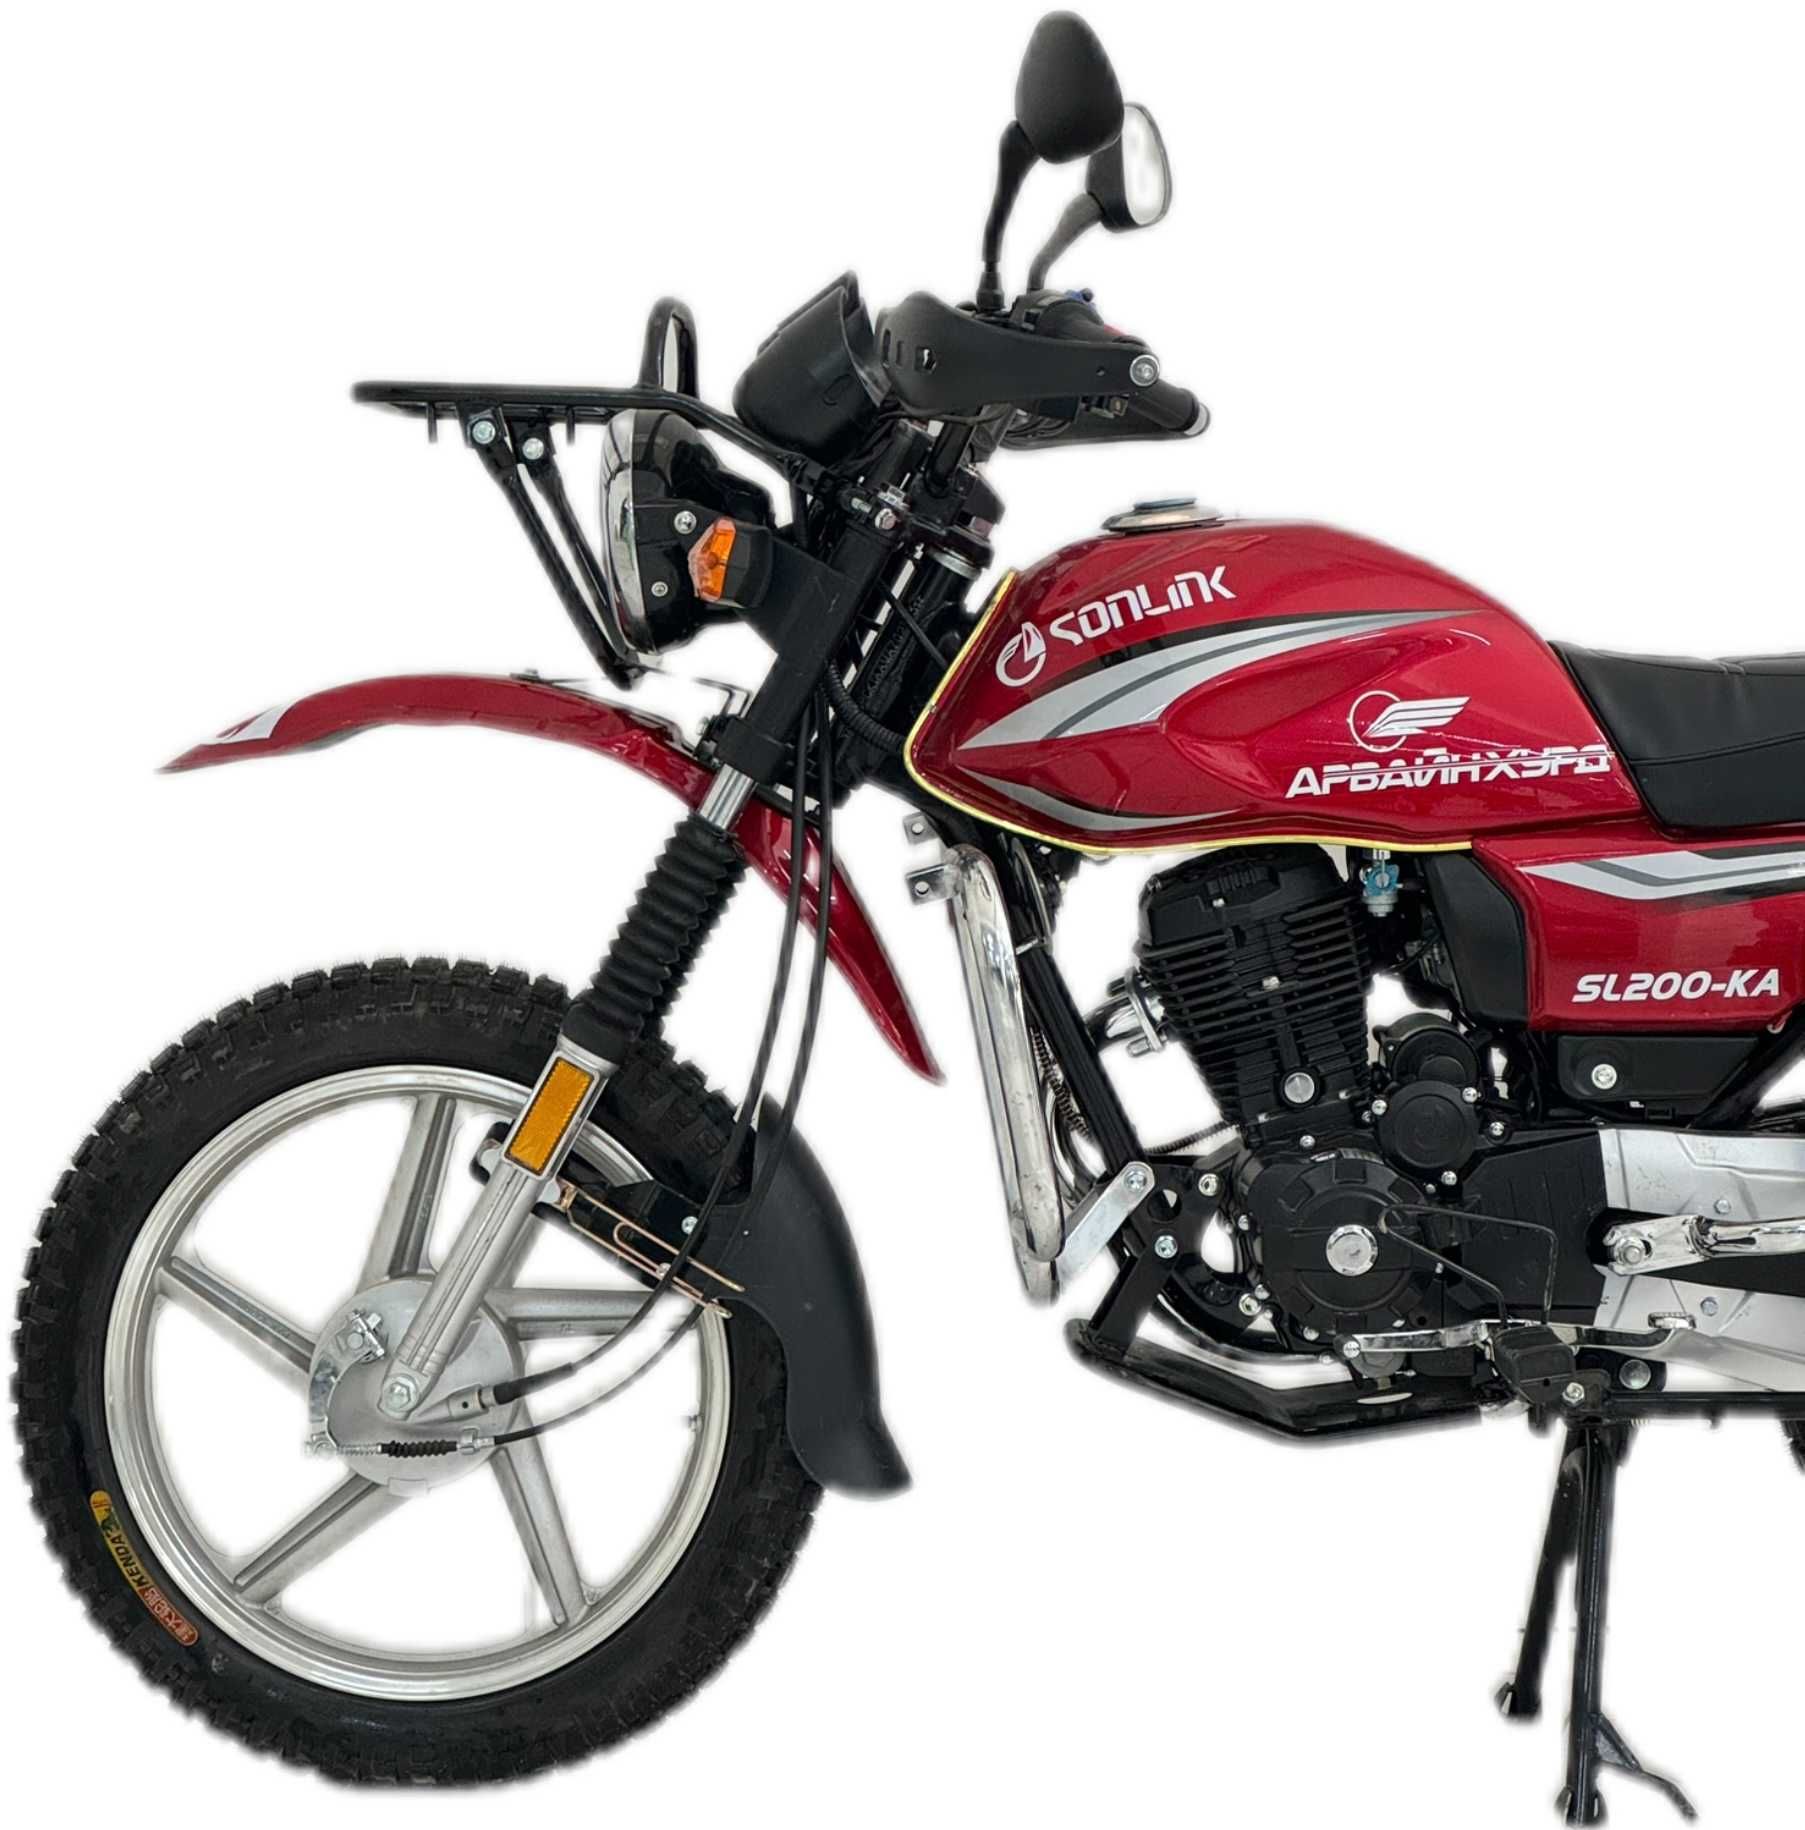 Сонлинк Мотоцикл 200 кубтық оригинал; Оригинал мотоцикл Sonlink 200CC